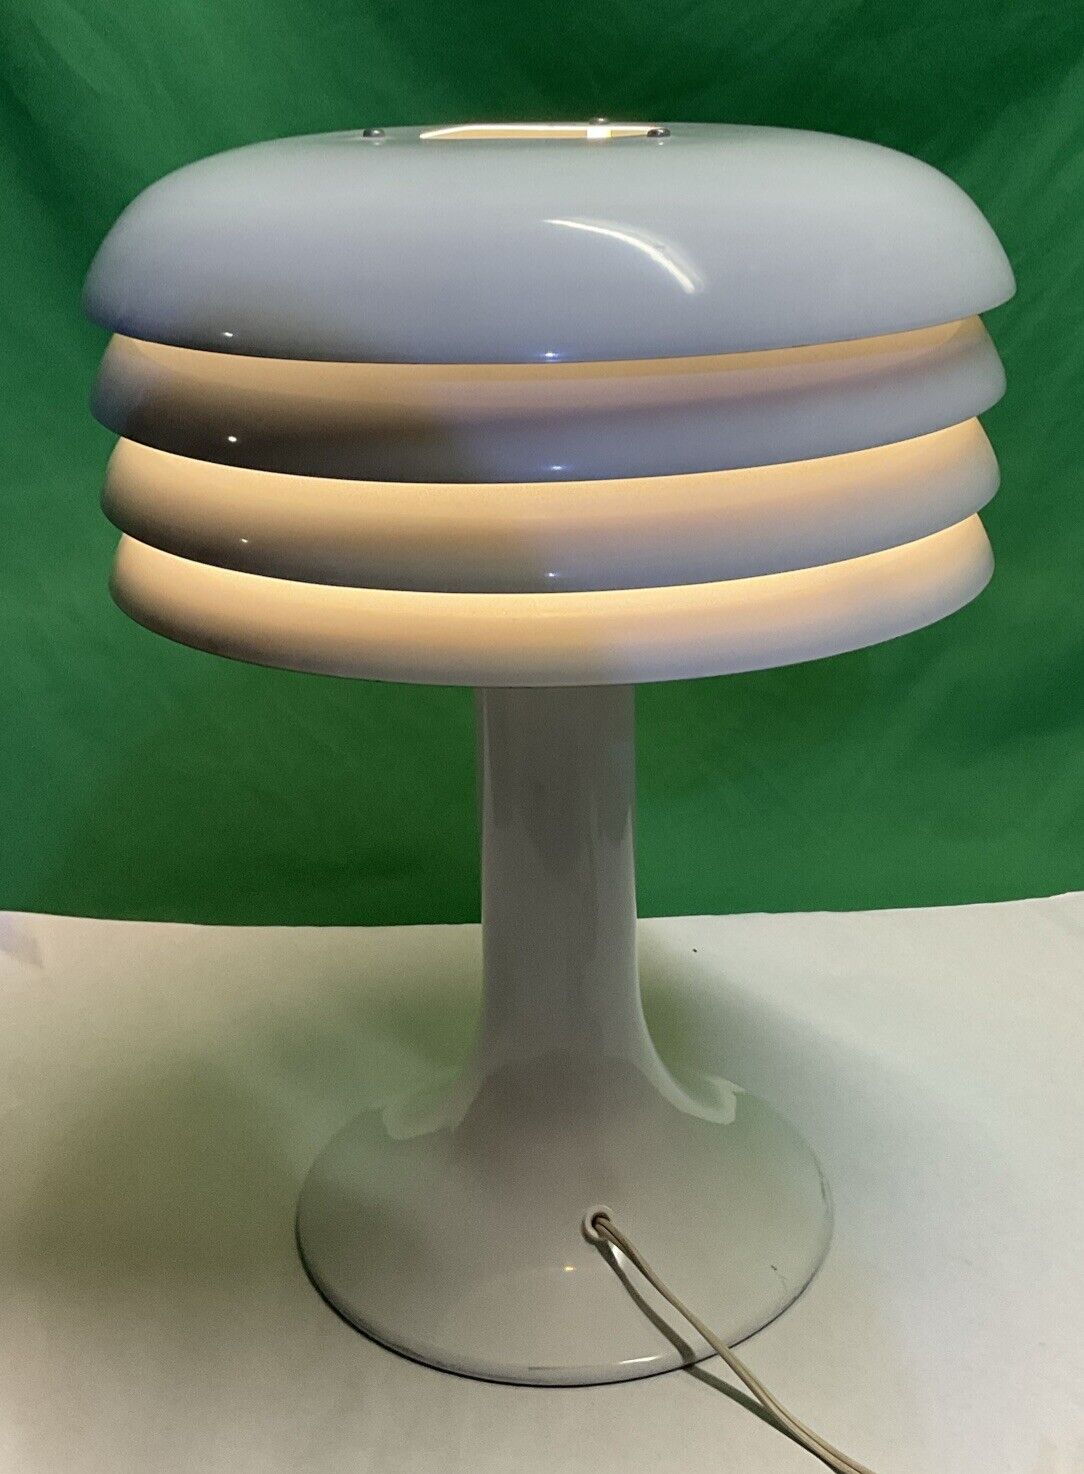 VINTAGE 1960s -HANS- AGNE JAKOBSSON TABLE LAMP #BN-26 - 17.72” X 13”